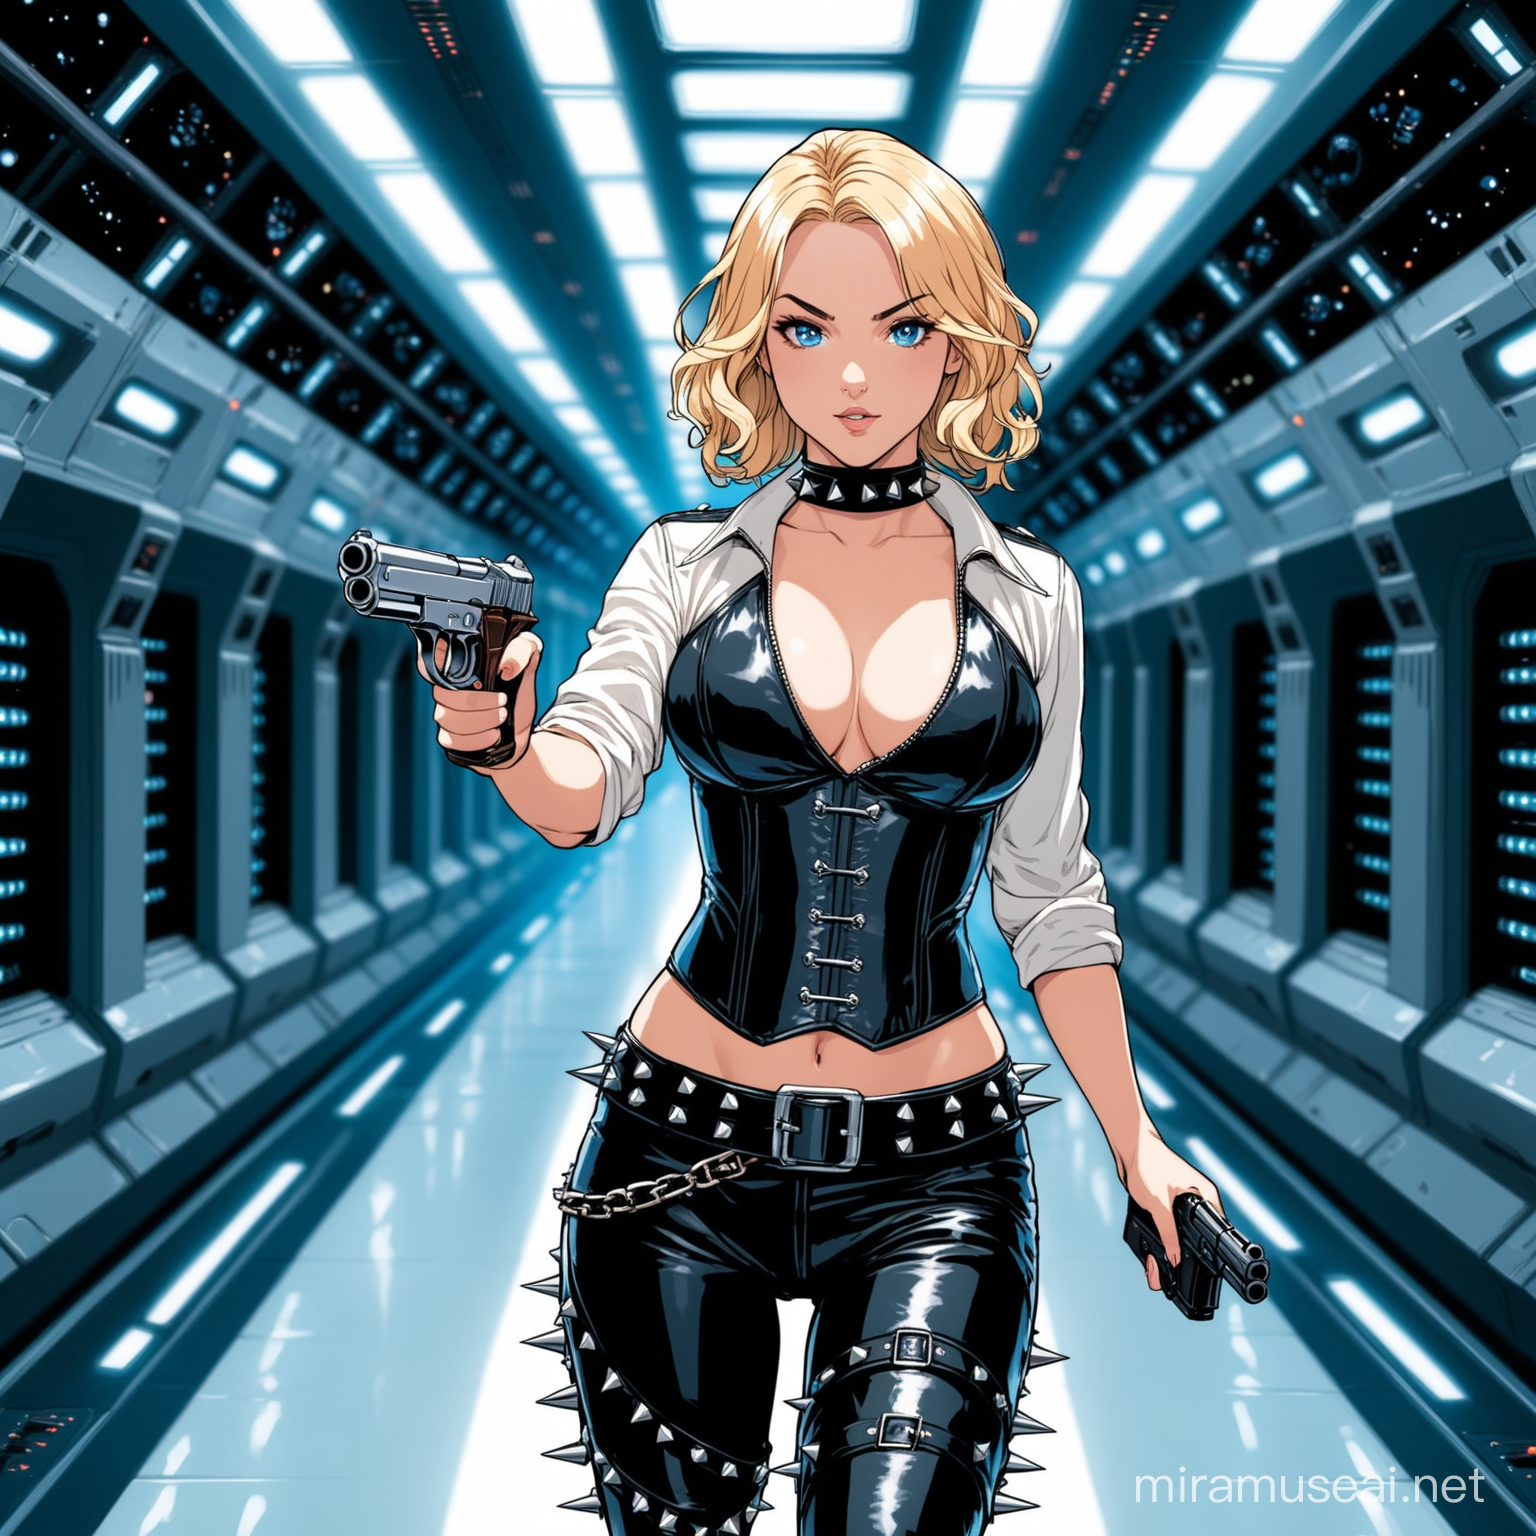 Blonde Woman in Leather Corset Shooting Pistol in Spaceship Hallway